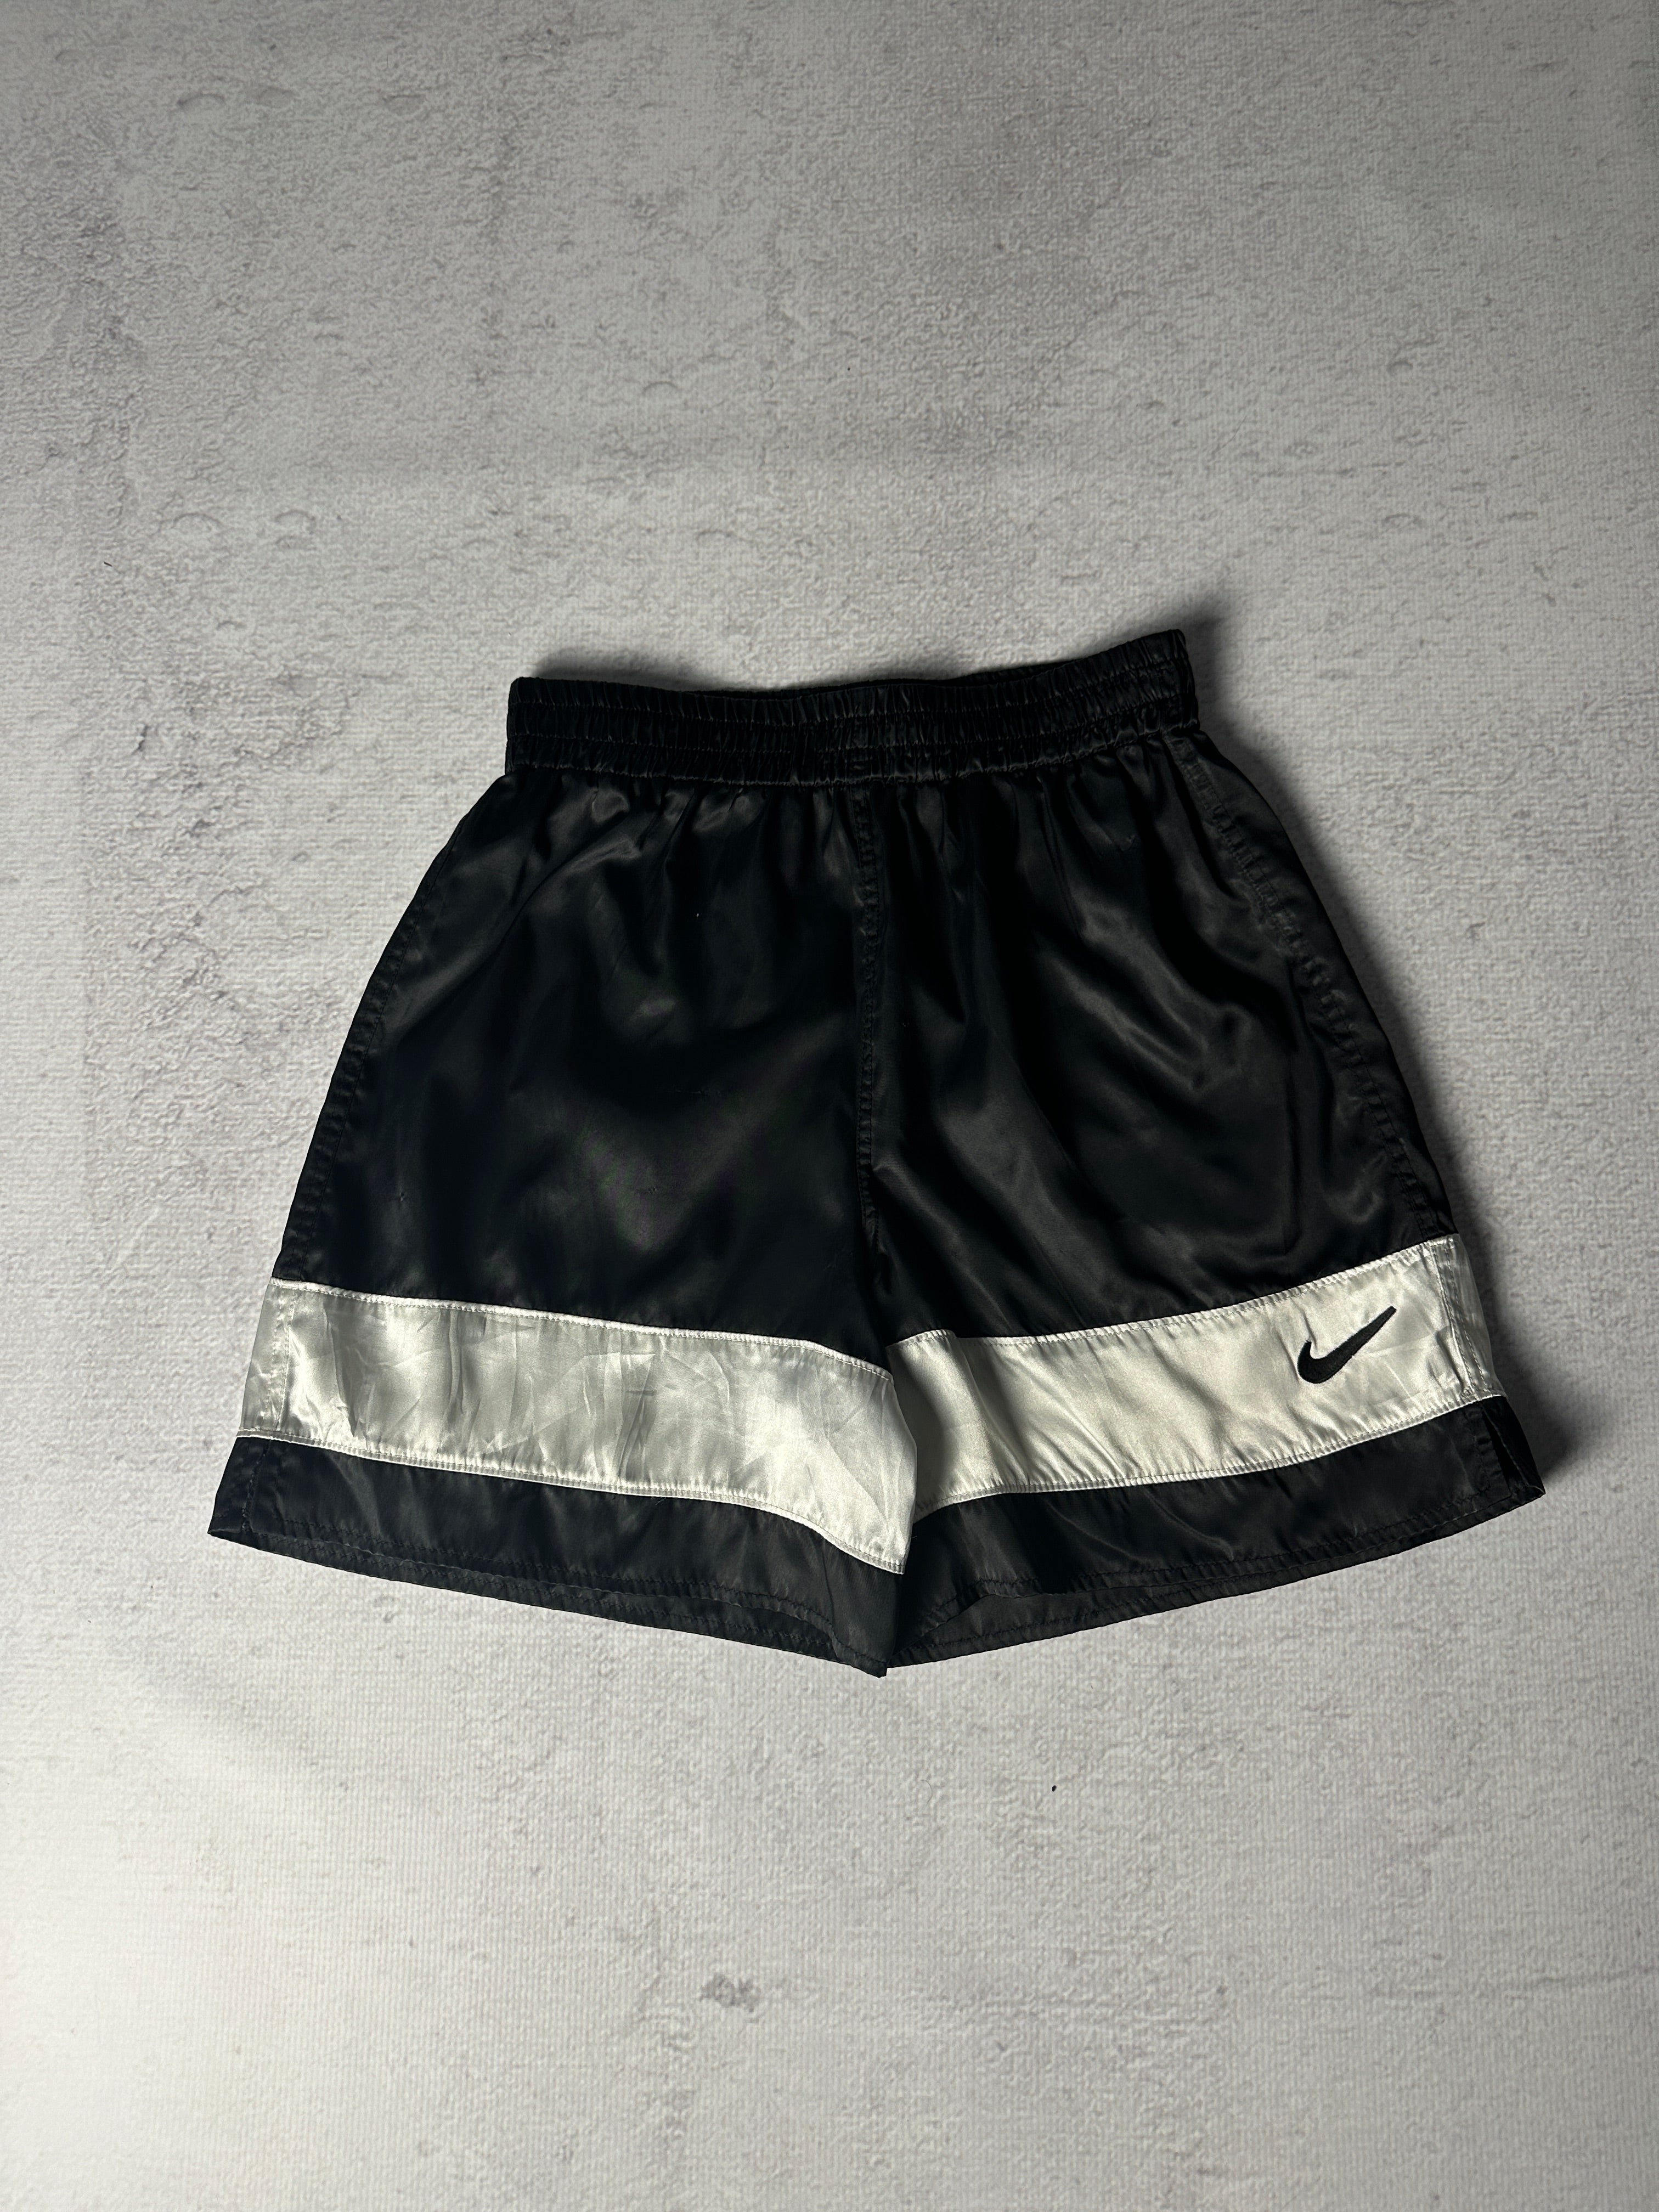 Vintage Nike Shorts - Men's Small